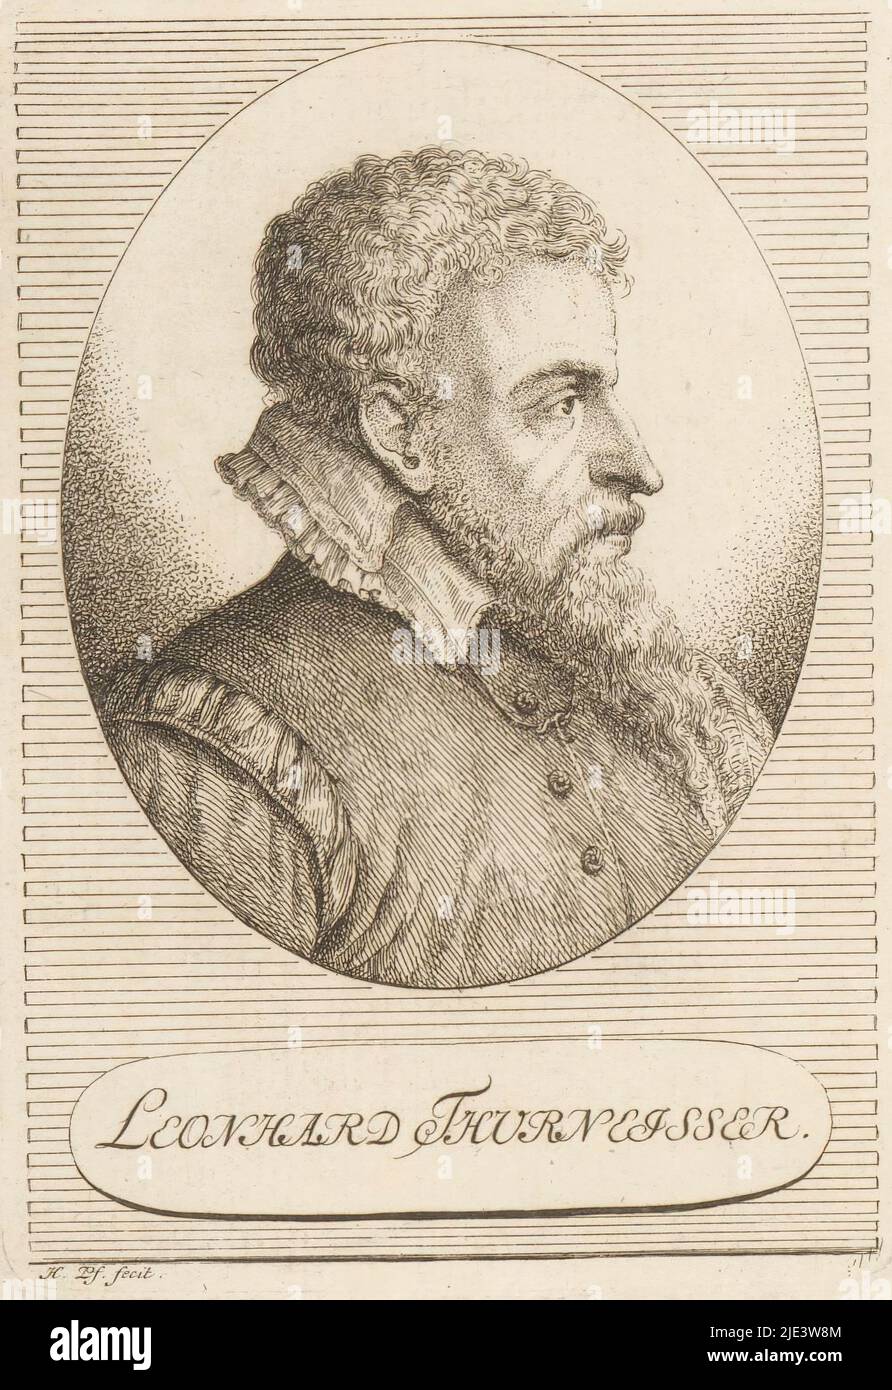 Portrait of Leonhard Thurneisser, print maker: Heinrich Pfenninger, (mentioned on object), 1759 - 1815, paper, etching, h 126 mm - w 89 mm Stock Photo